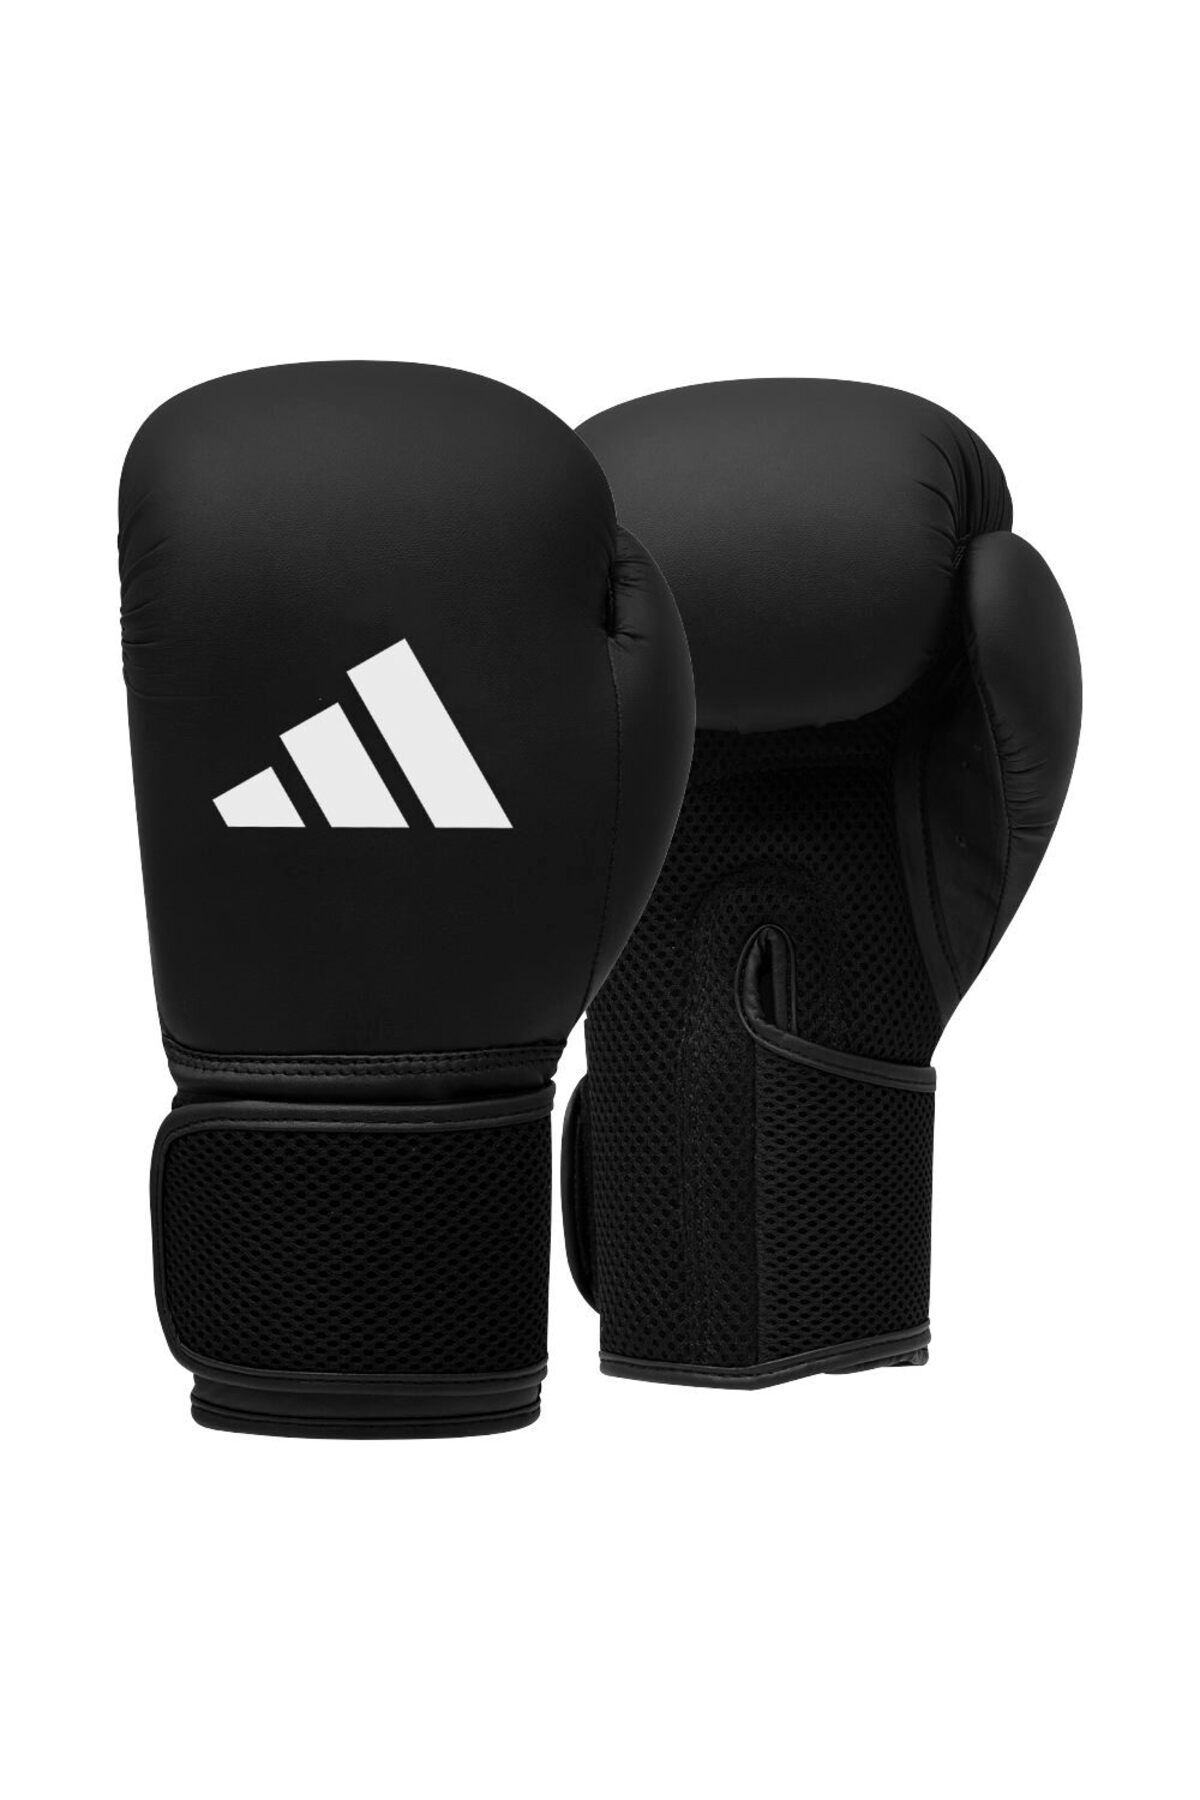 adidas ADIH25 Hybrid 25 Boks Eldiveni Muay Thai Boxing Gloves